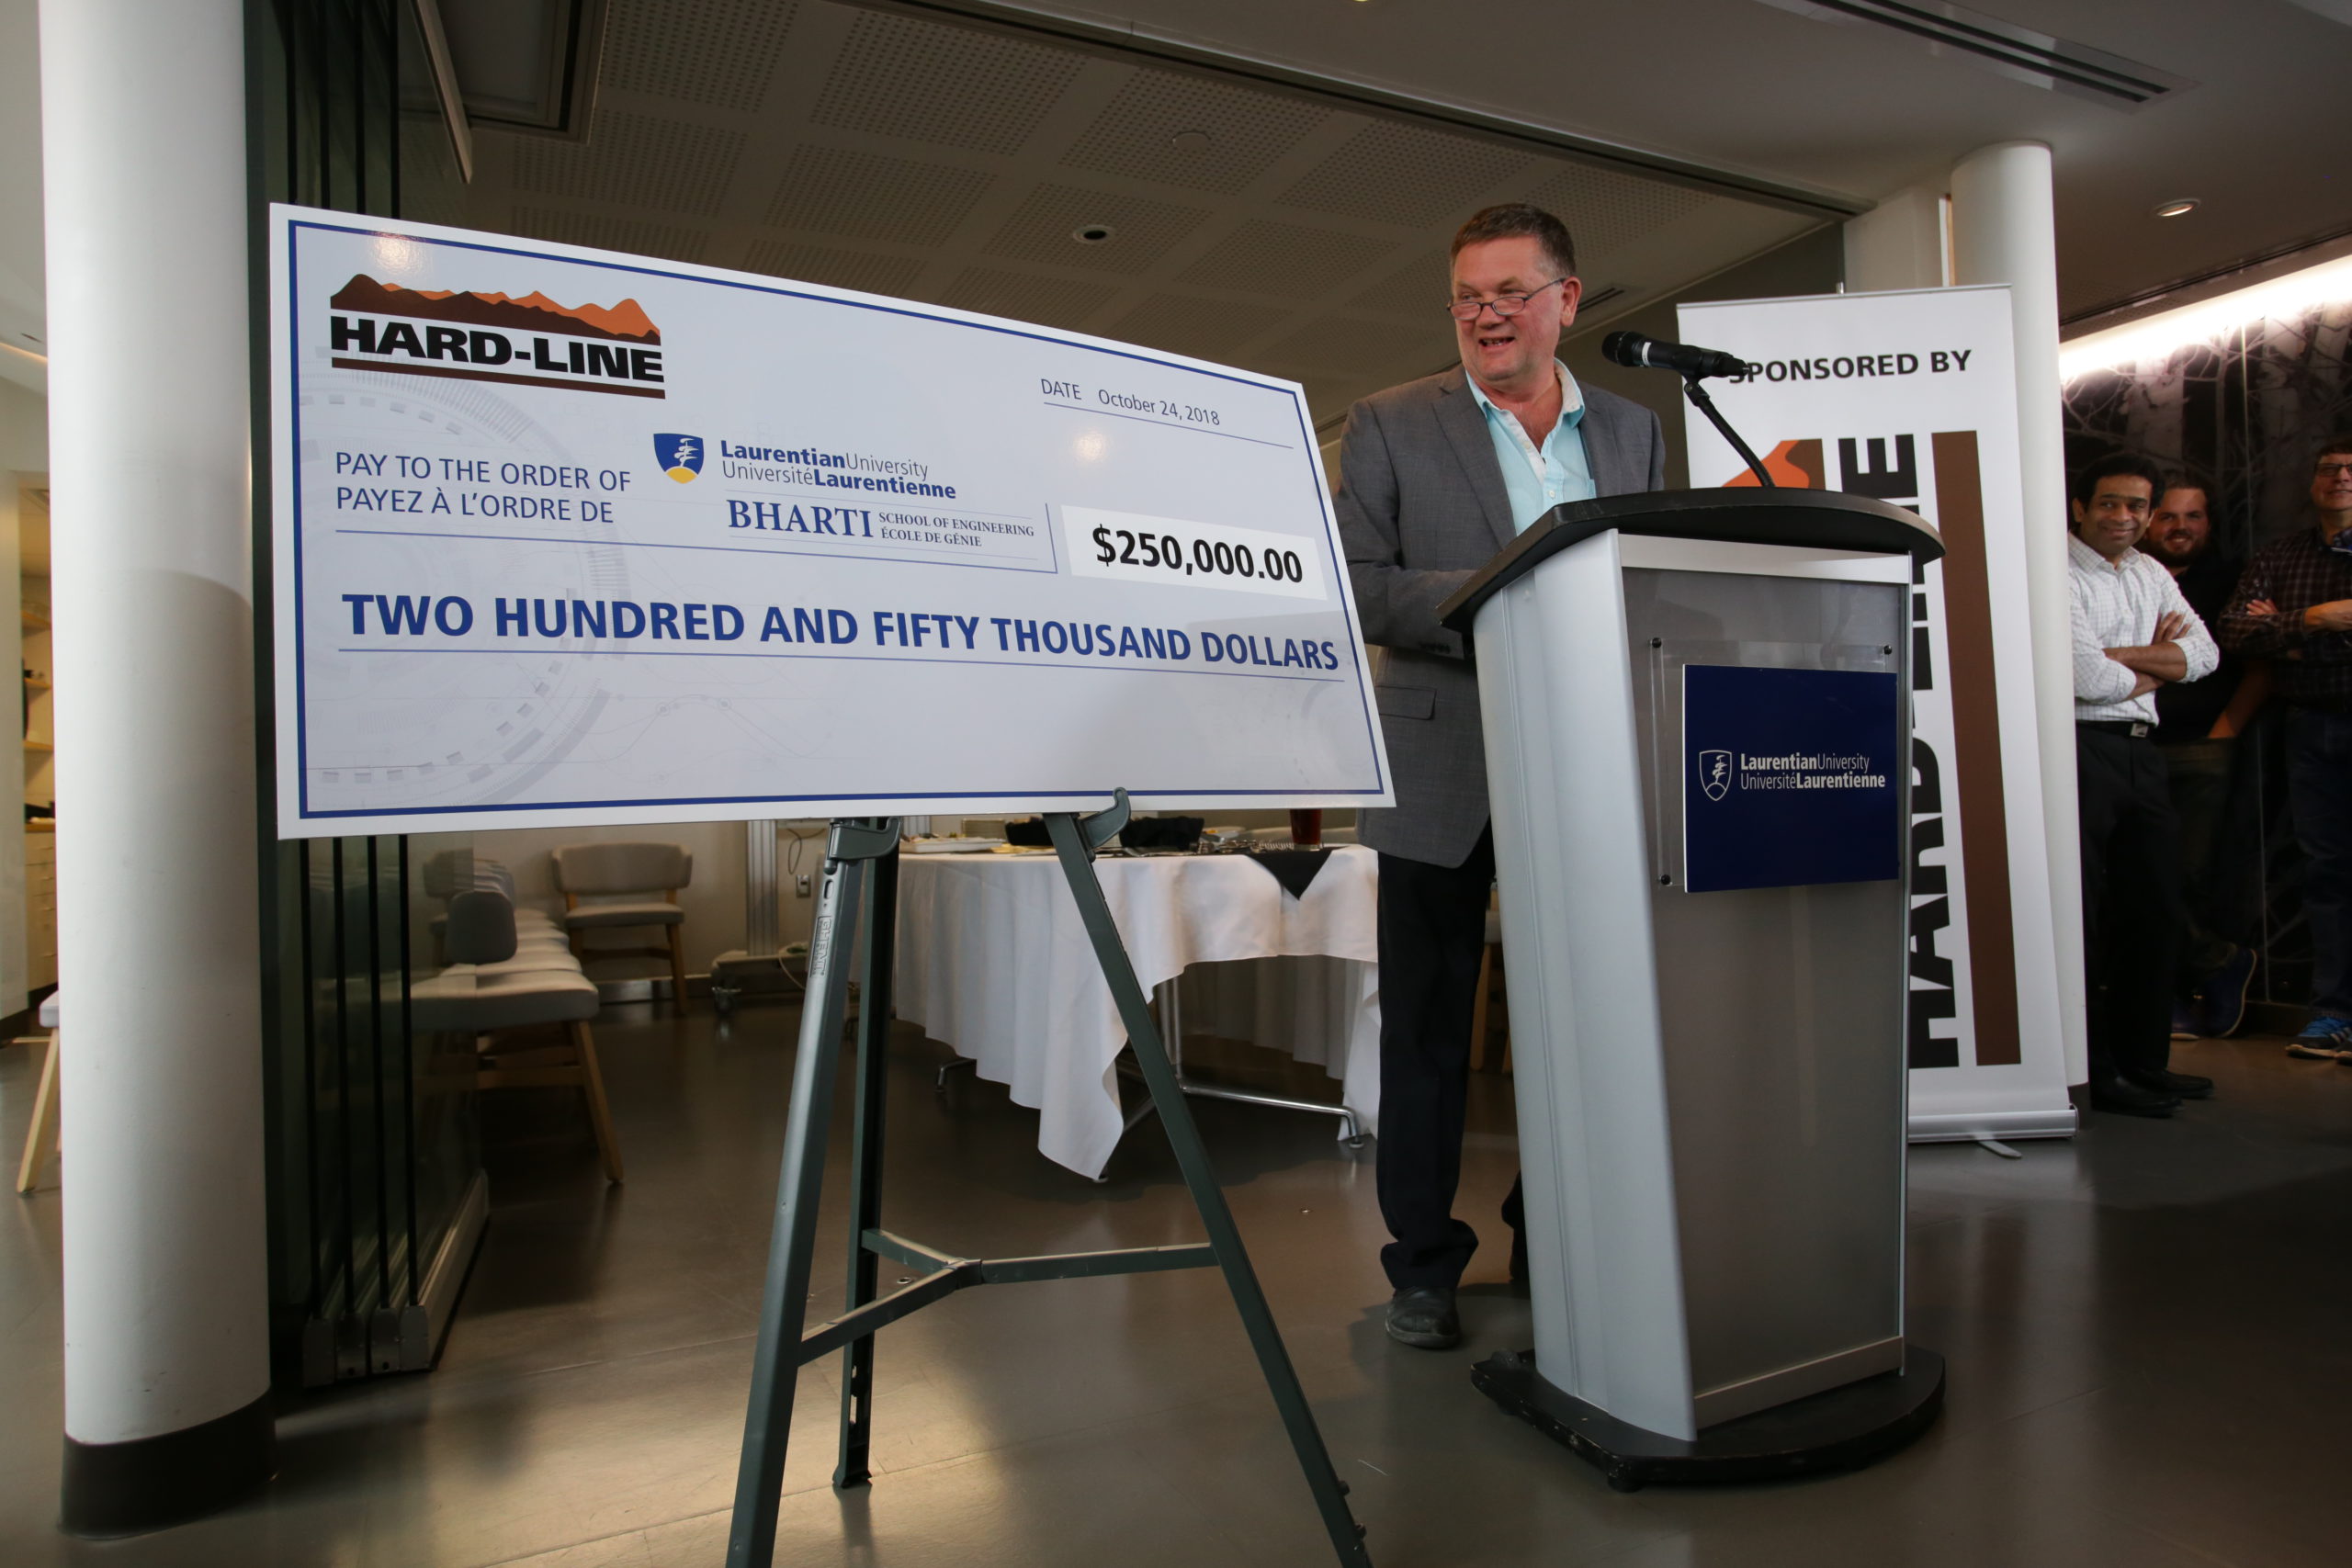 Walter Presenting $250,000 cheque to Laurentian University